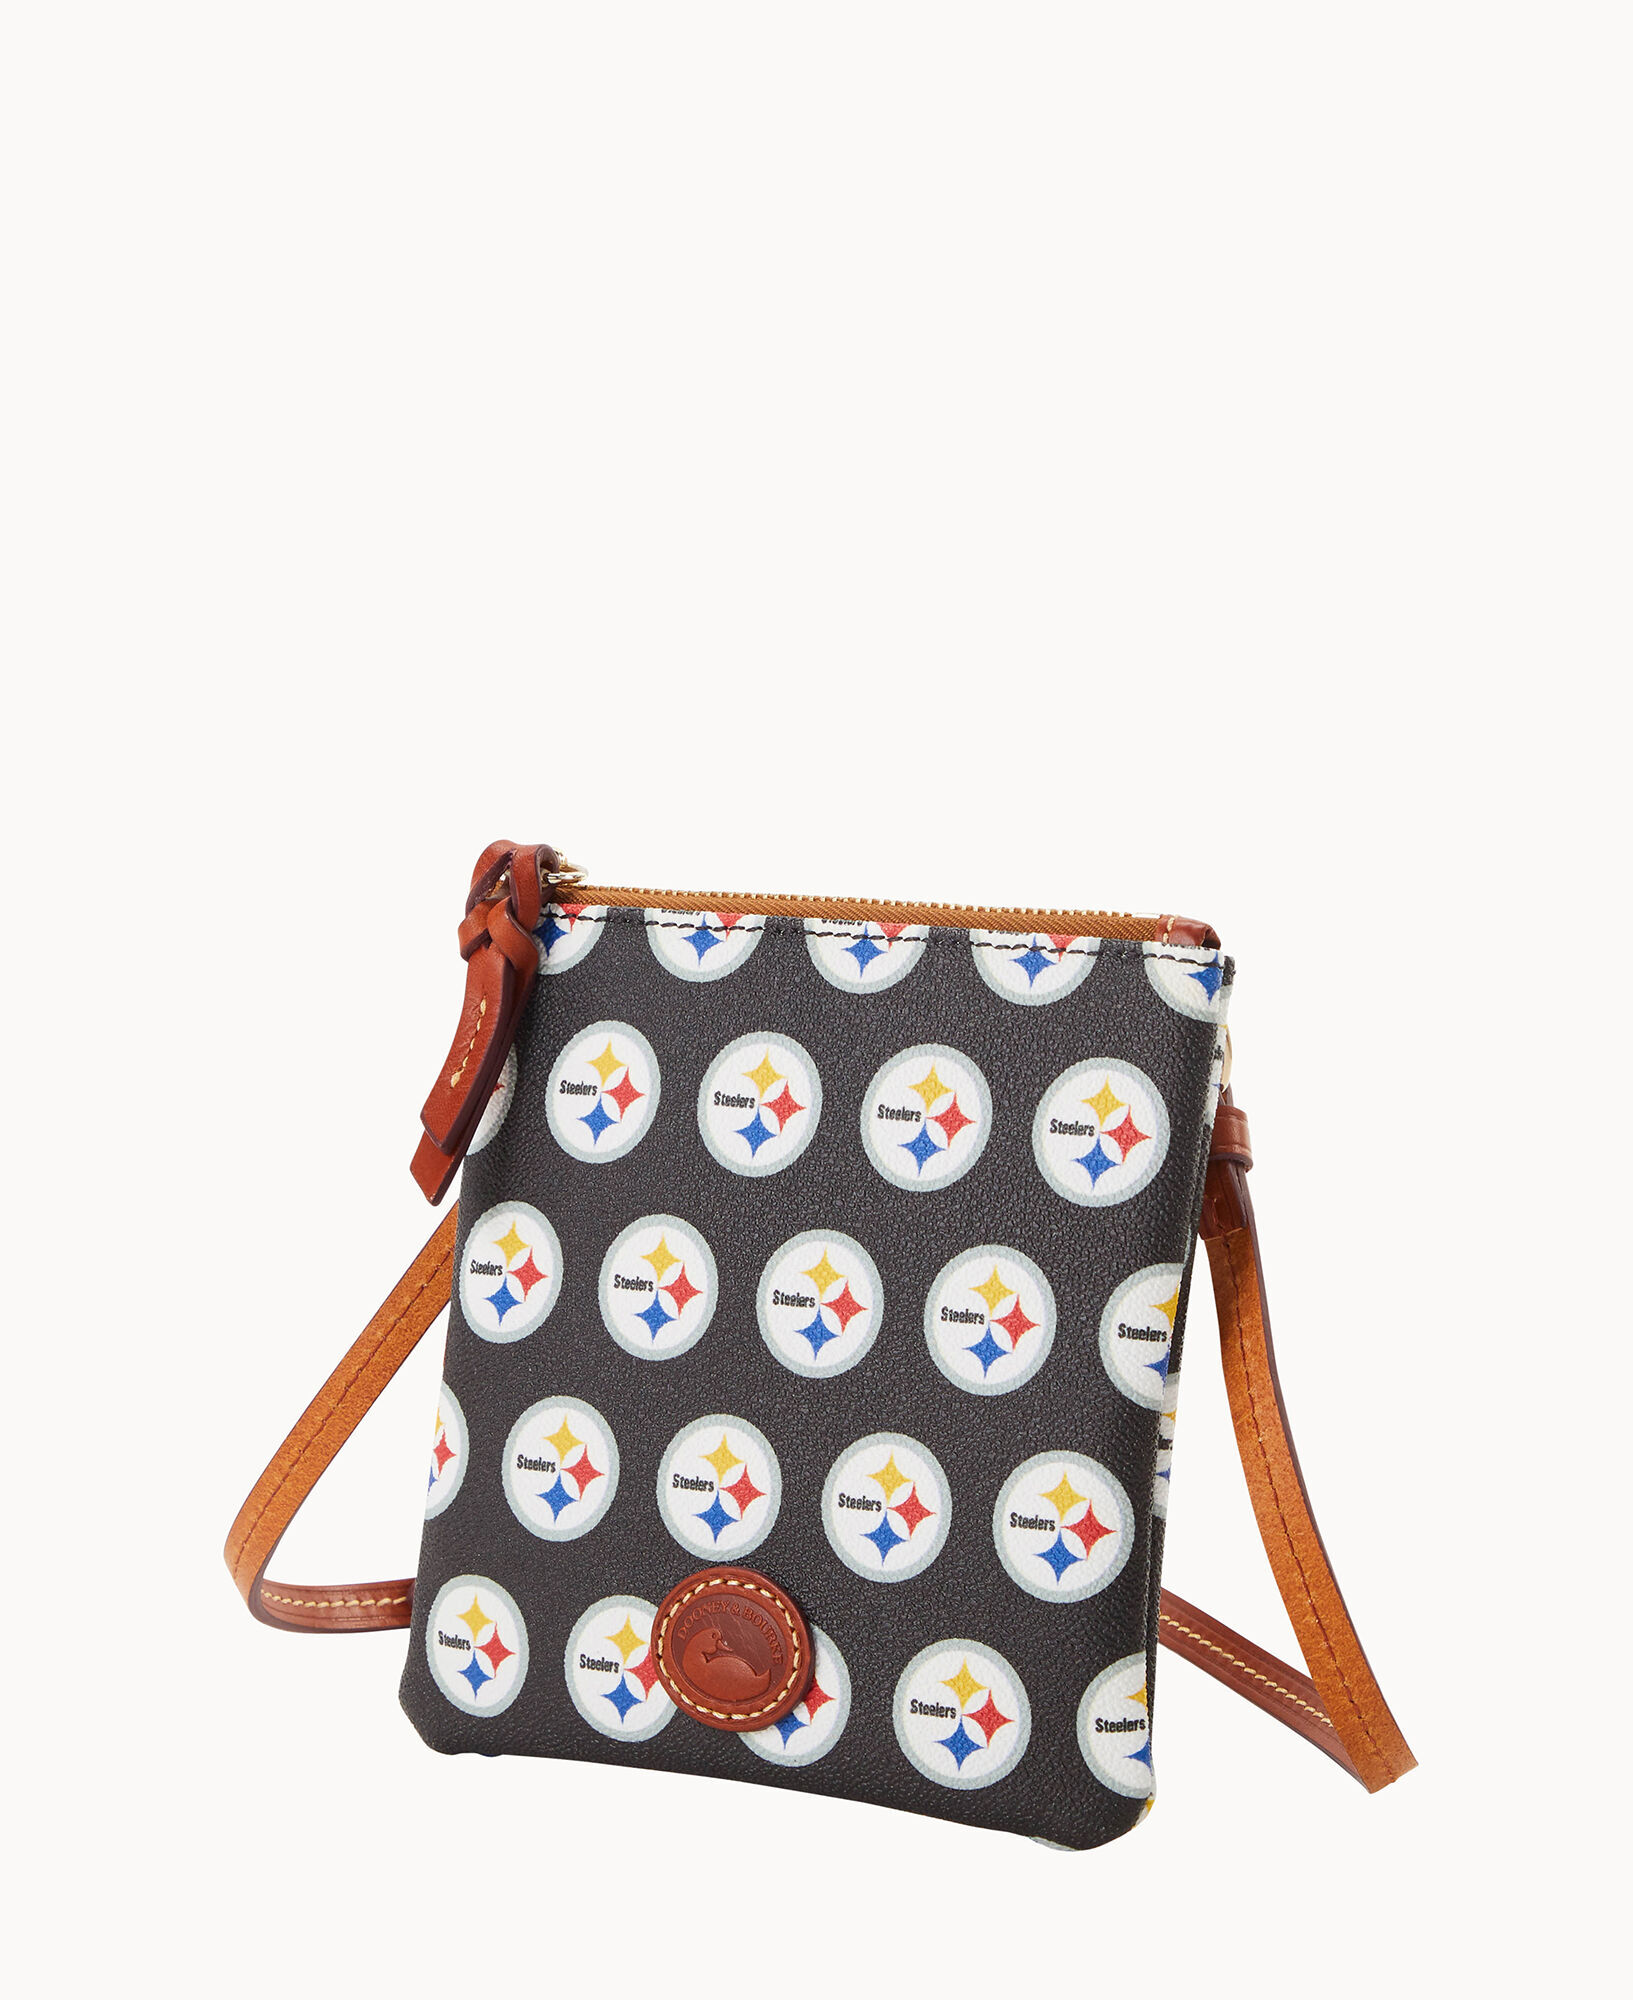 Dooney & Bourke NFL Pittsburgh Steelers Small North South Top Zip Crossbody Shoulder Bag